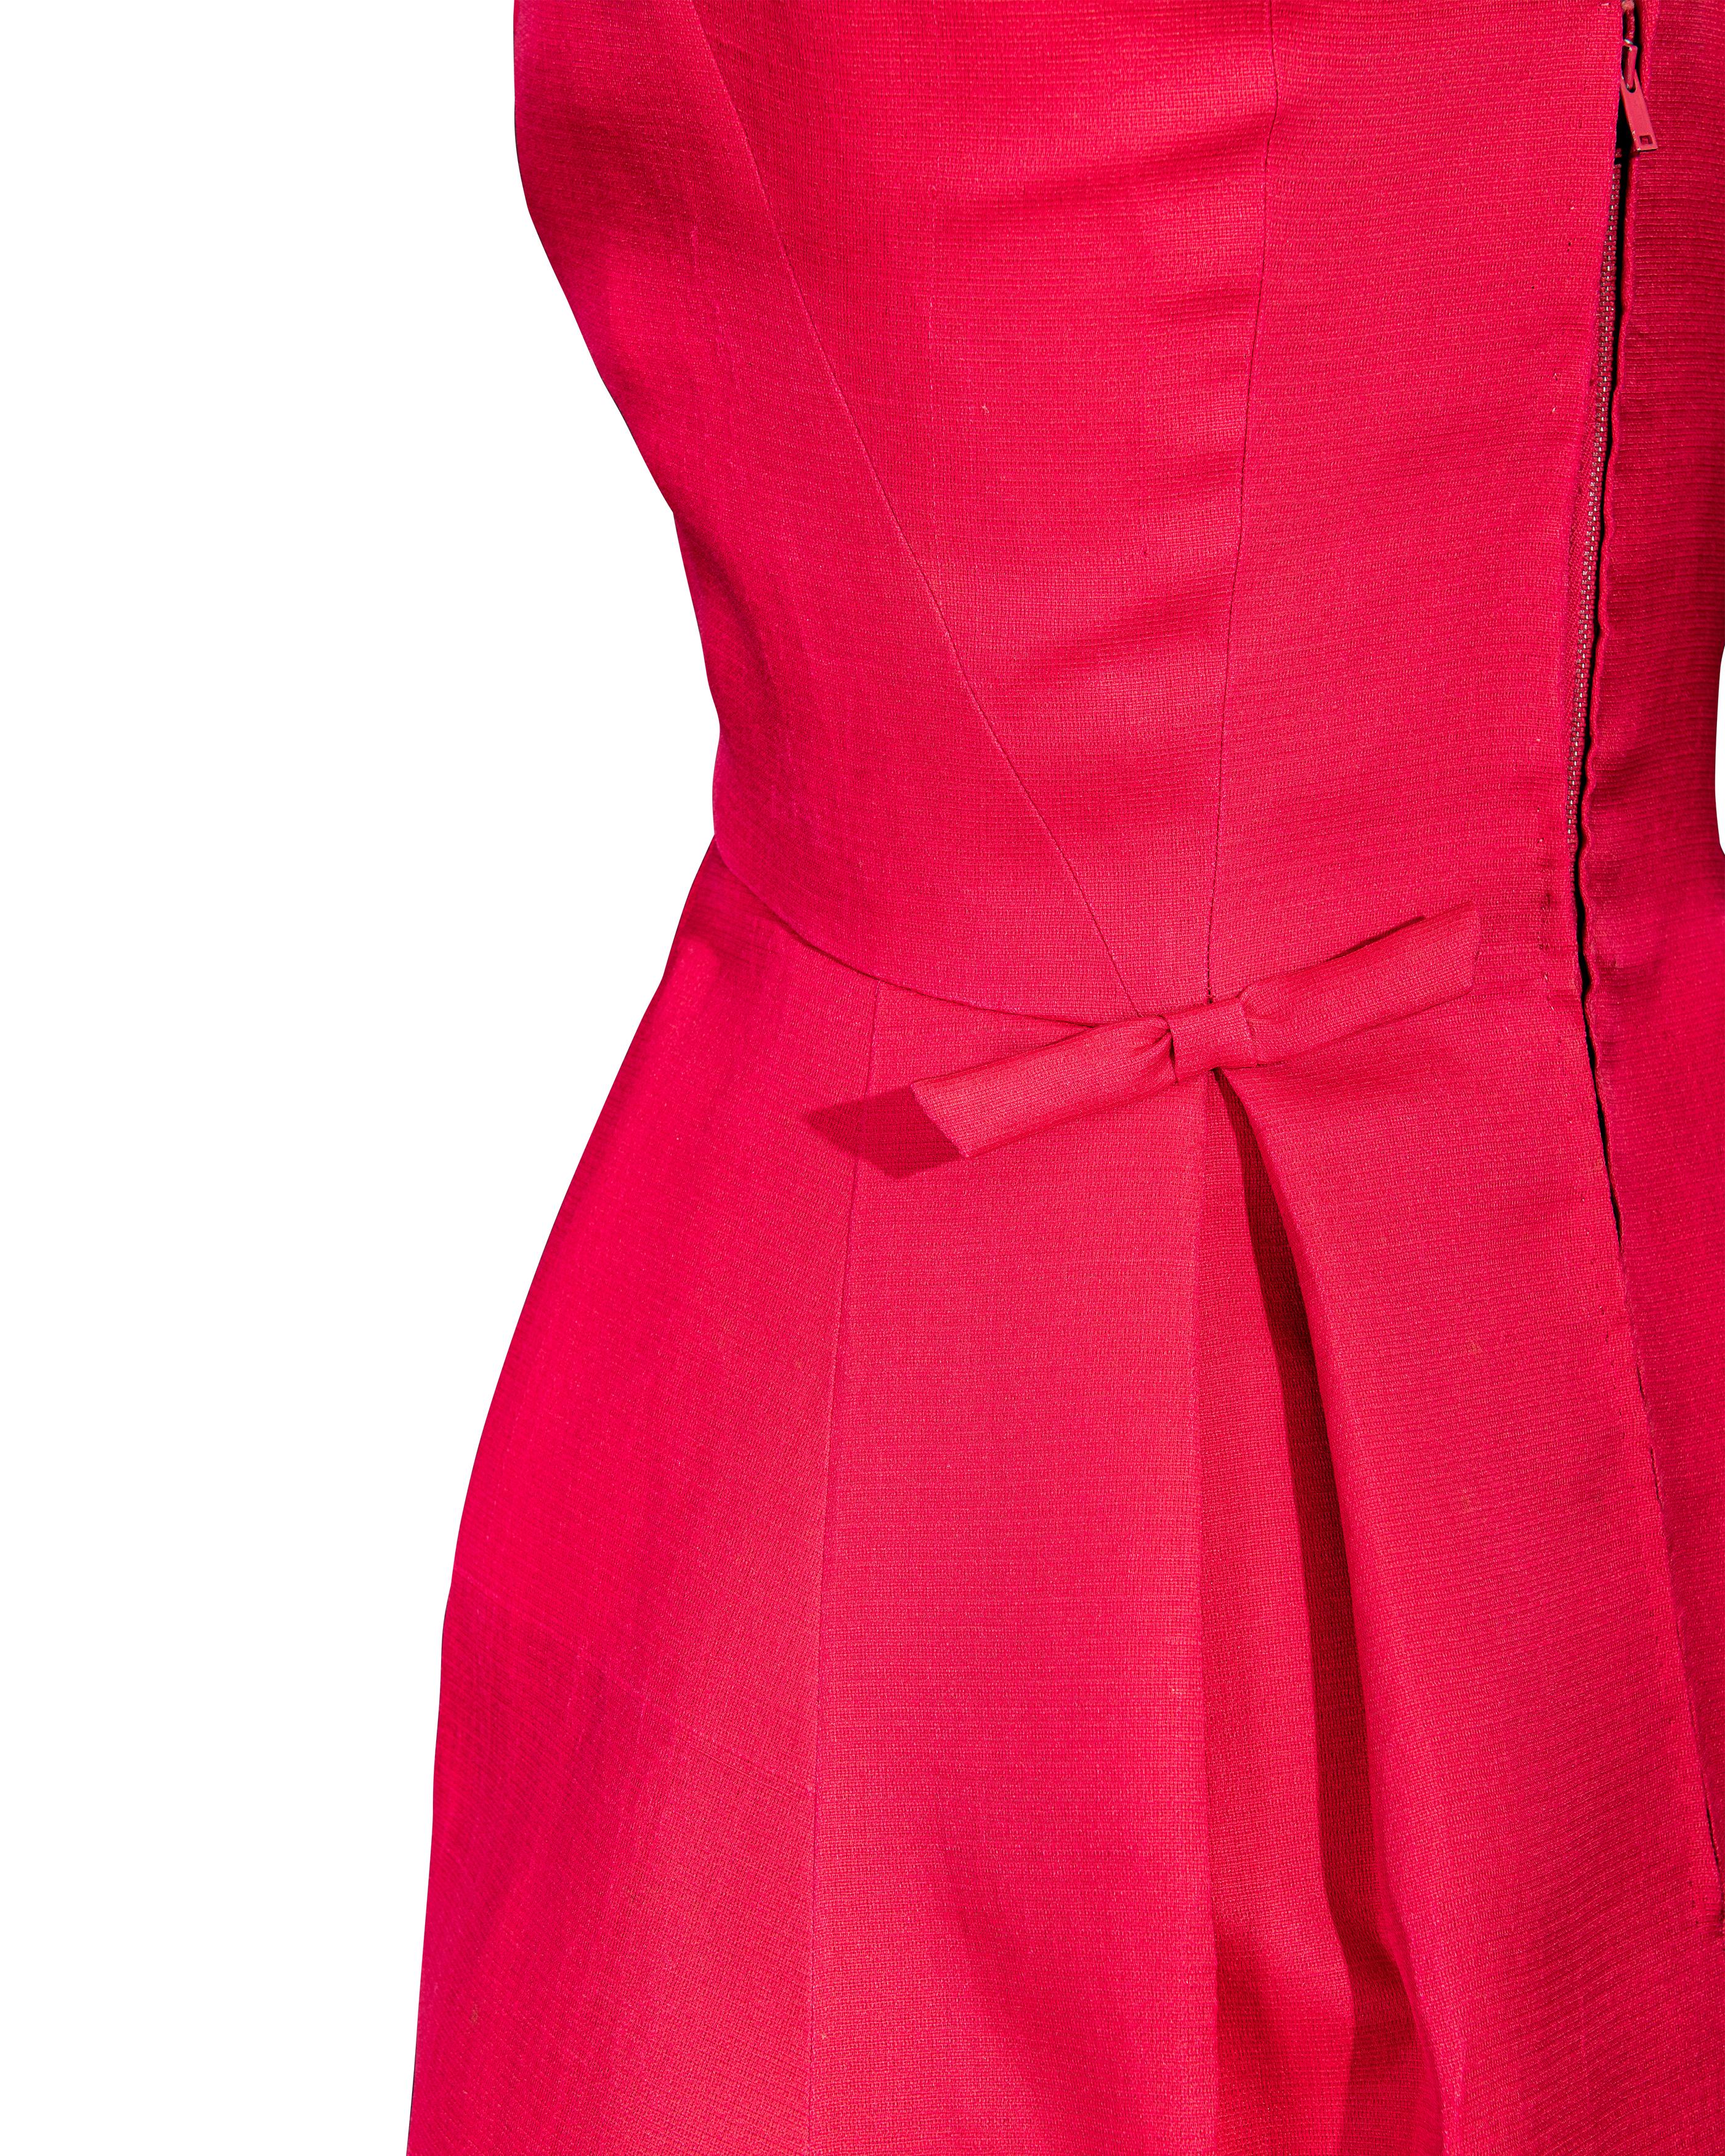 S/S 1964 Balenciaga Deep Rose Pink Silk Sleeveless Gown 3